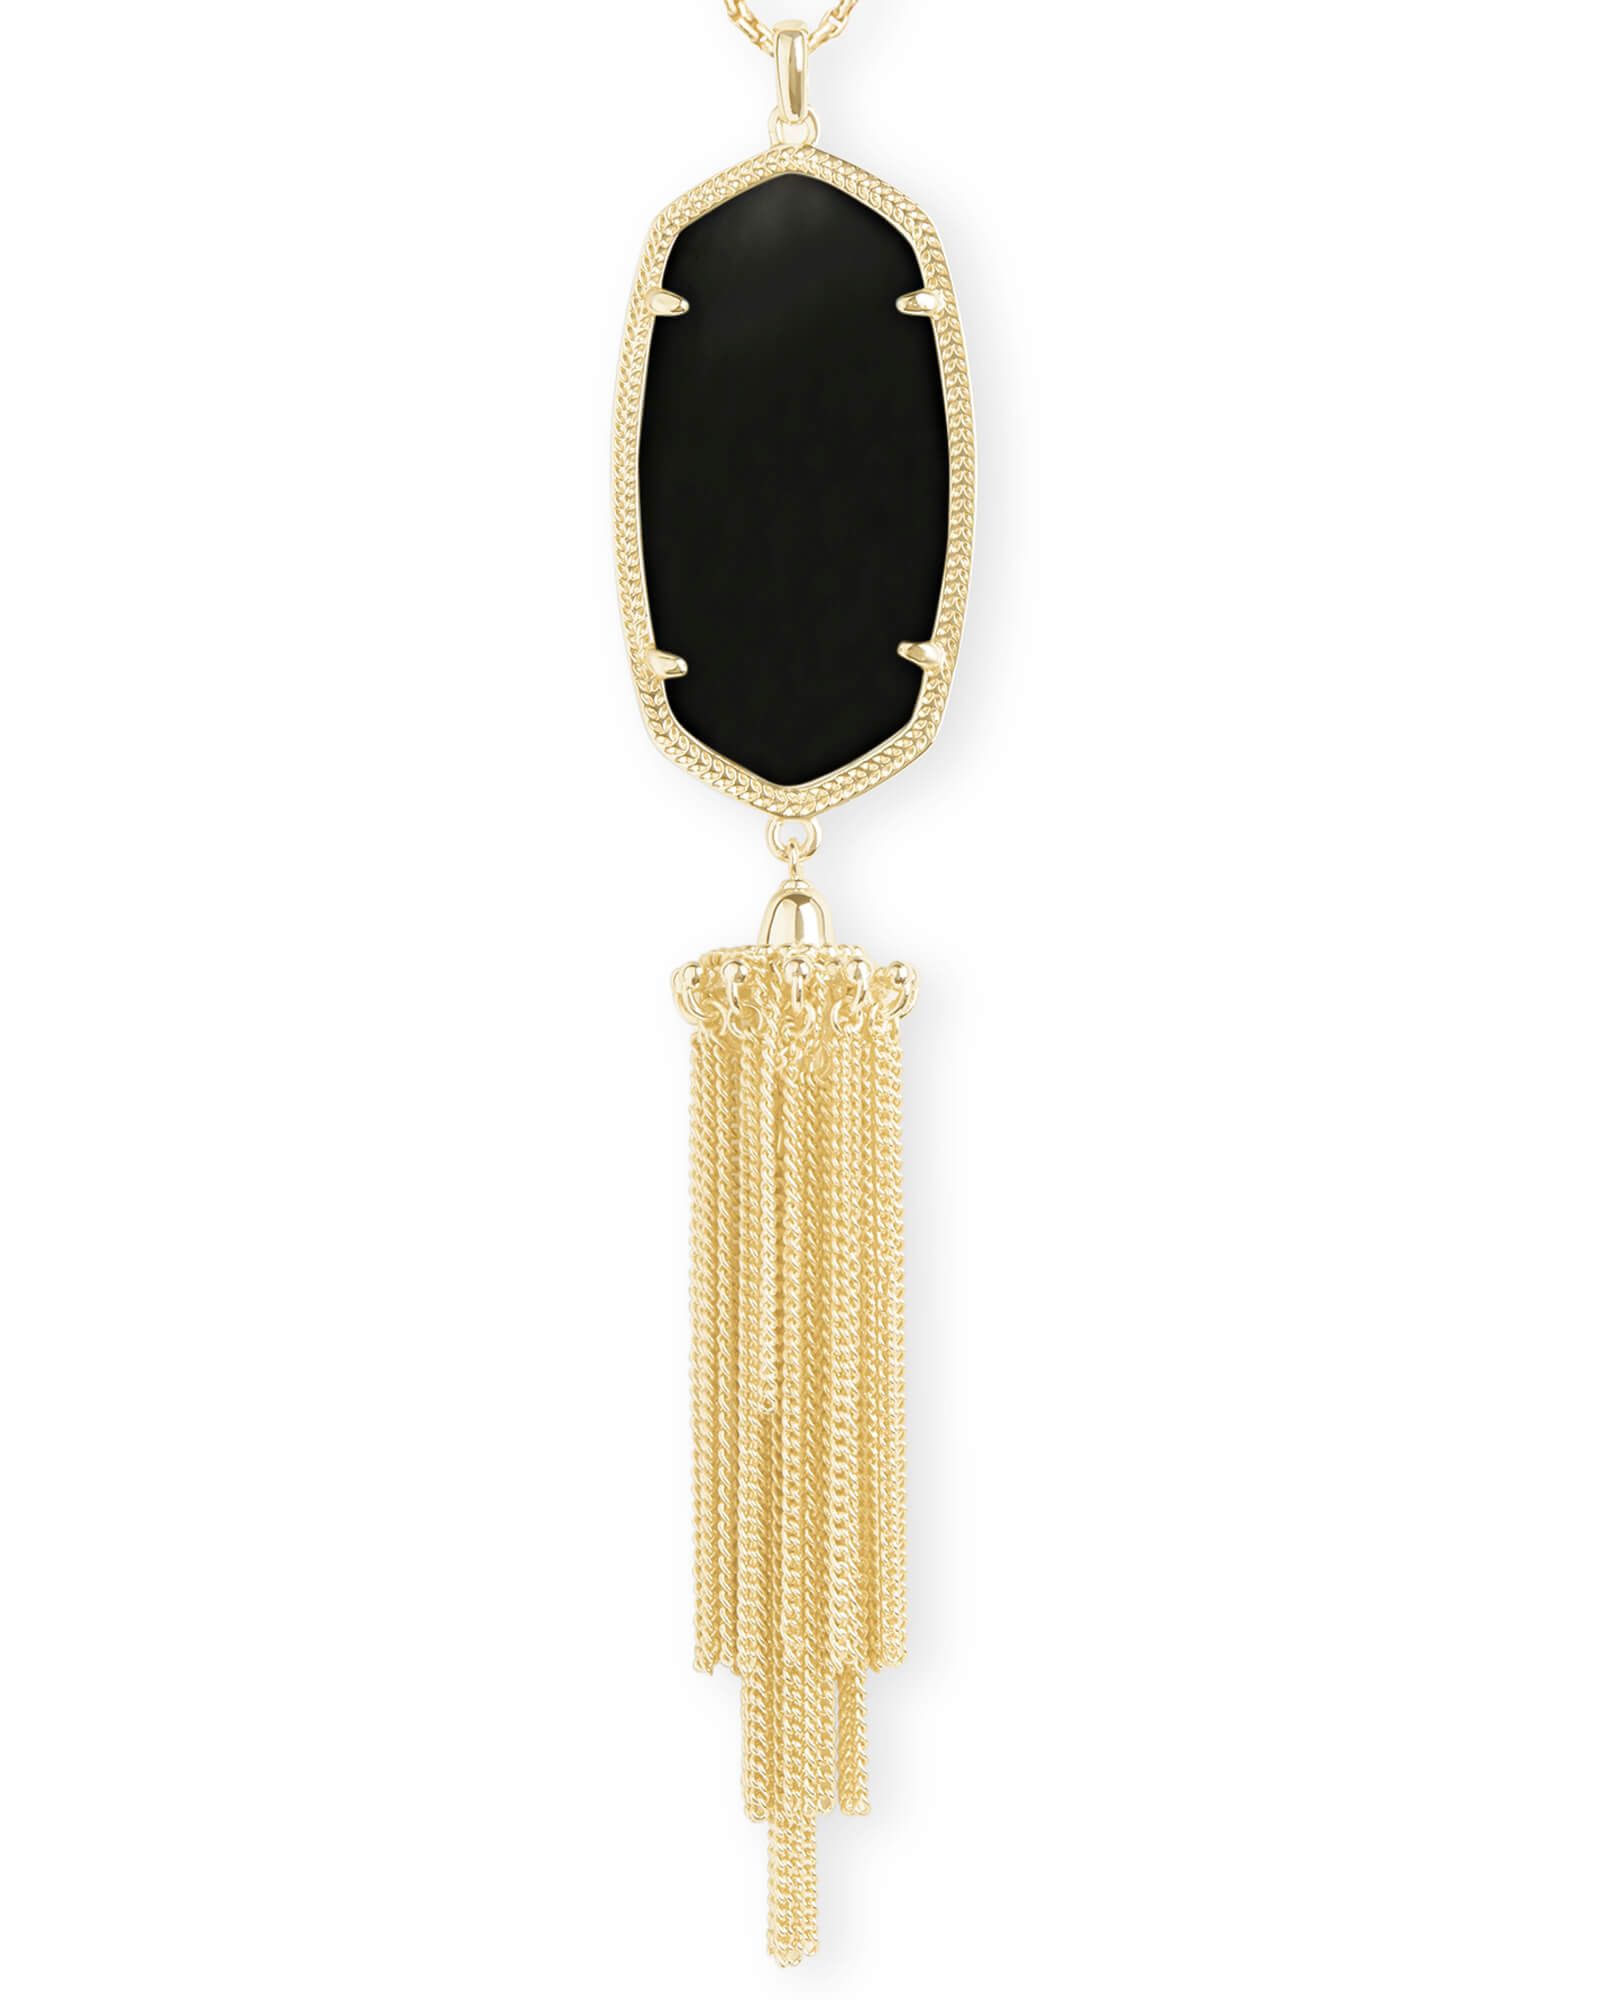 Rayne Gold Long Pendant Necklace in Black | Kendra Scott | Kendra Scott